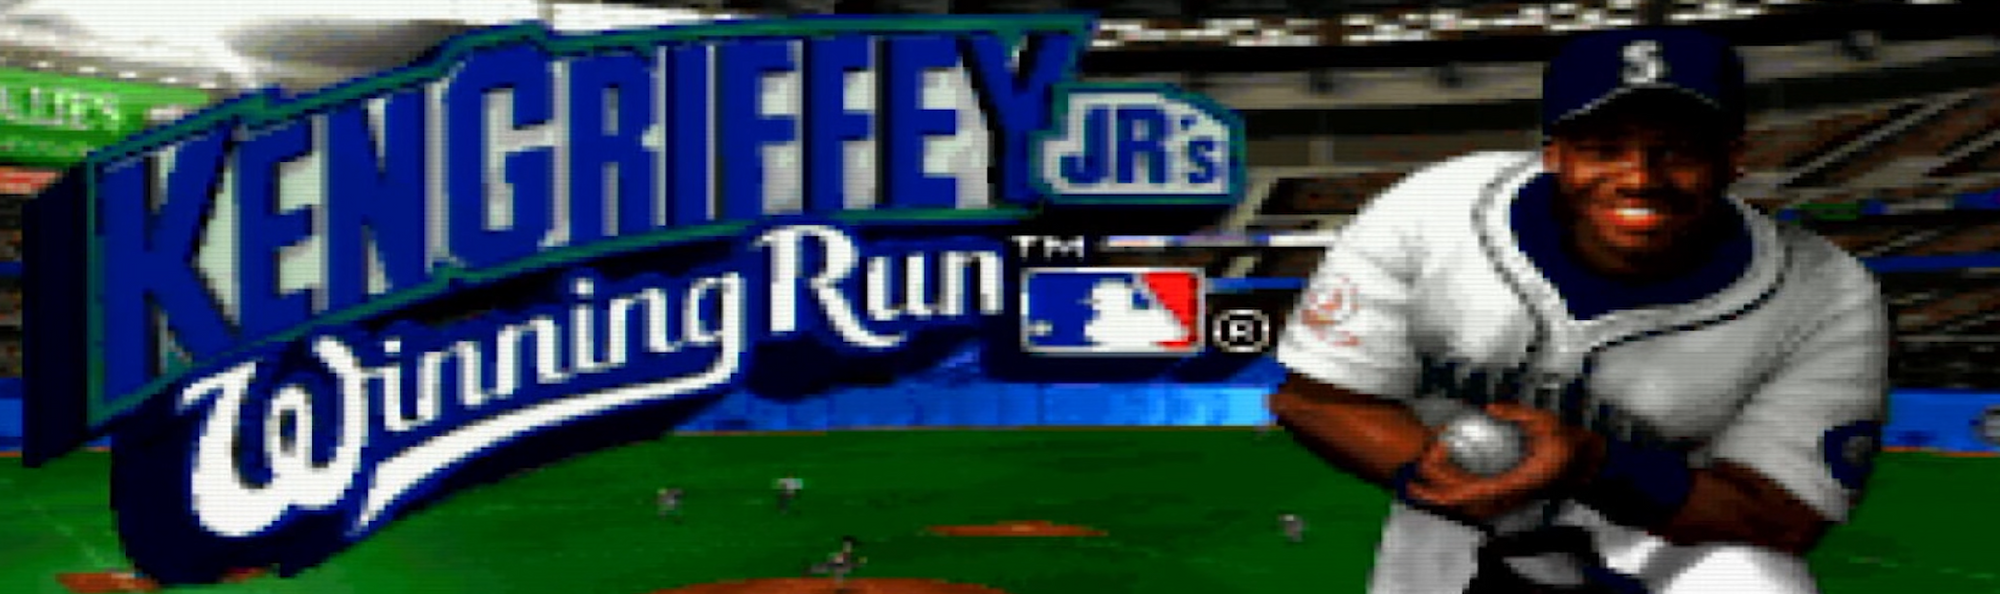 Ken Griffey Jr’s Winning Run SNES